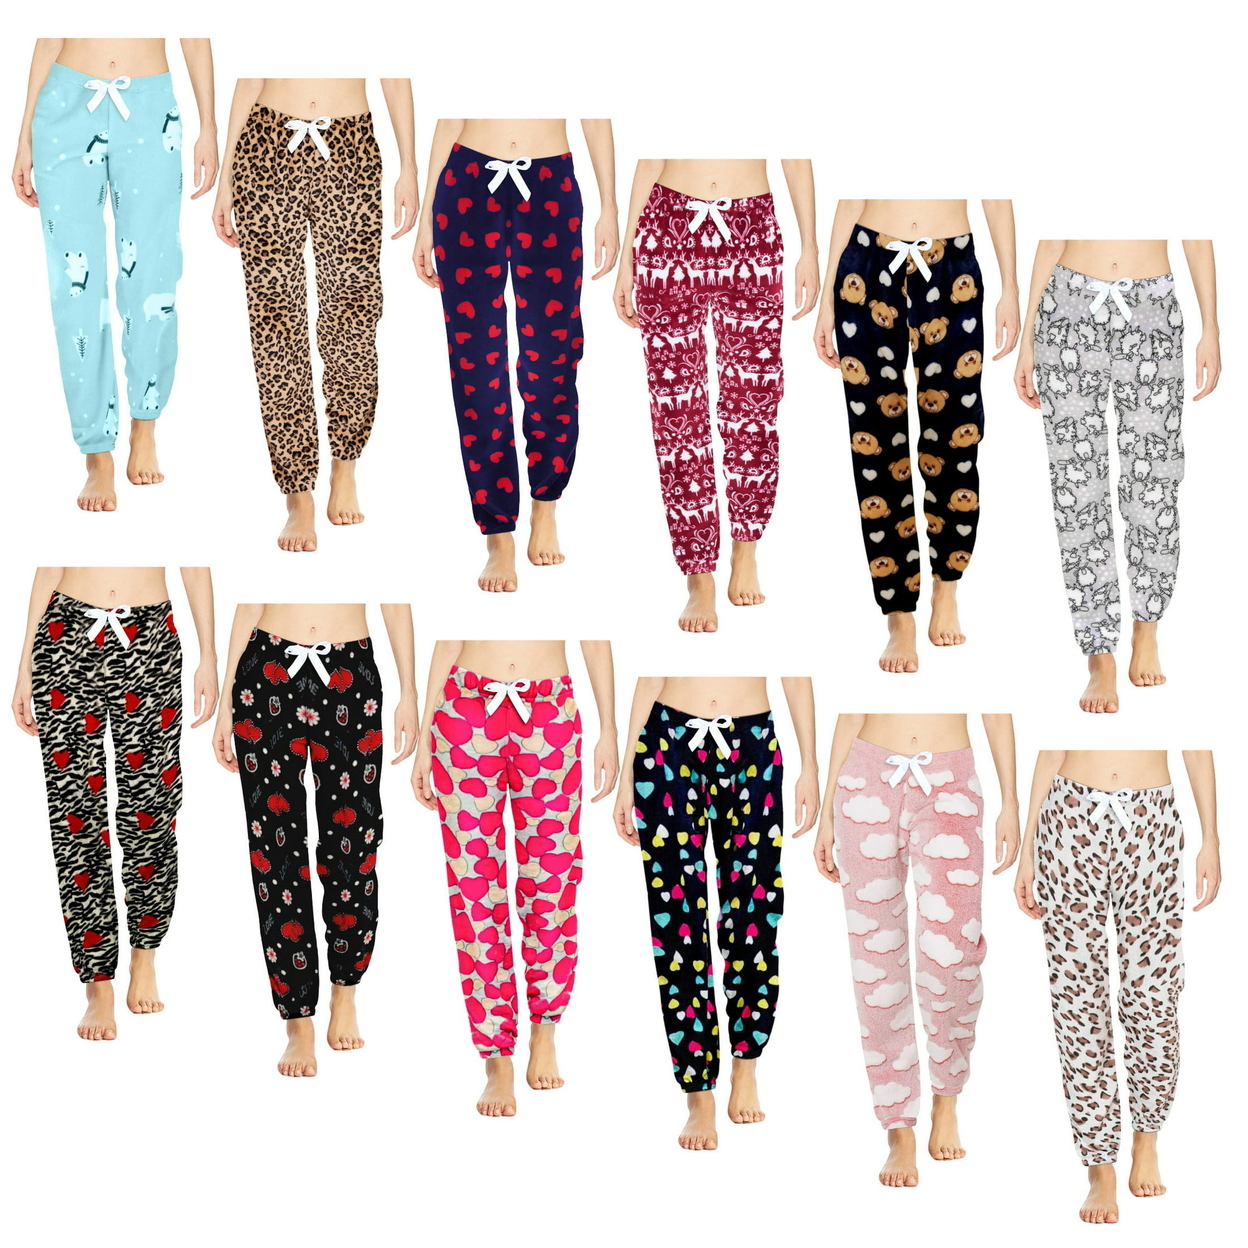 4-Pack: Women's Printed Ultra-Soft Comfy Stretch Micro-Fleece Pajama Lounge Pants - X-large, Animal